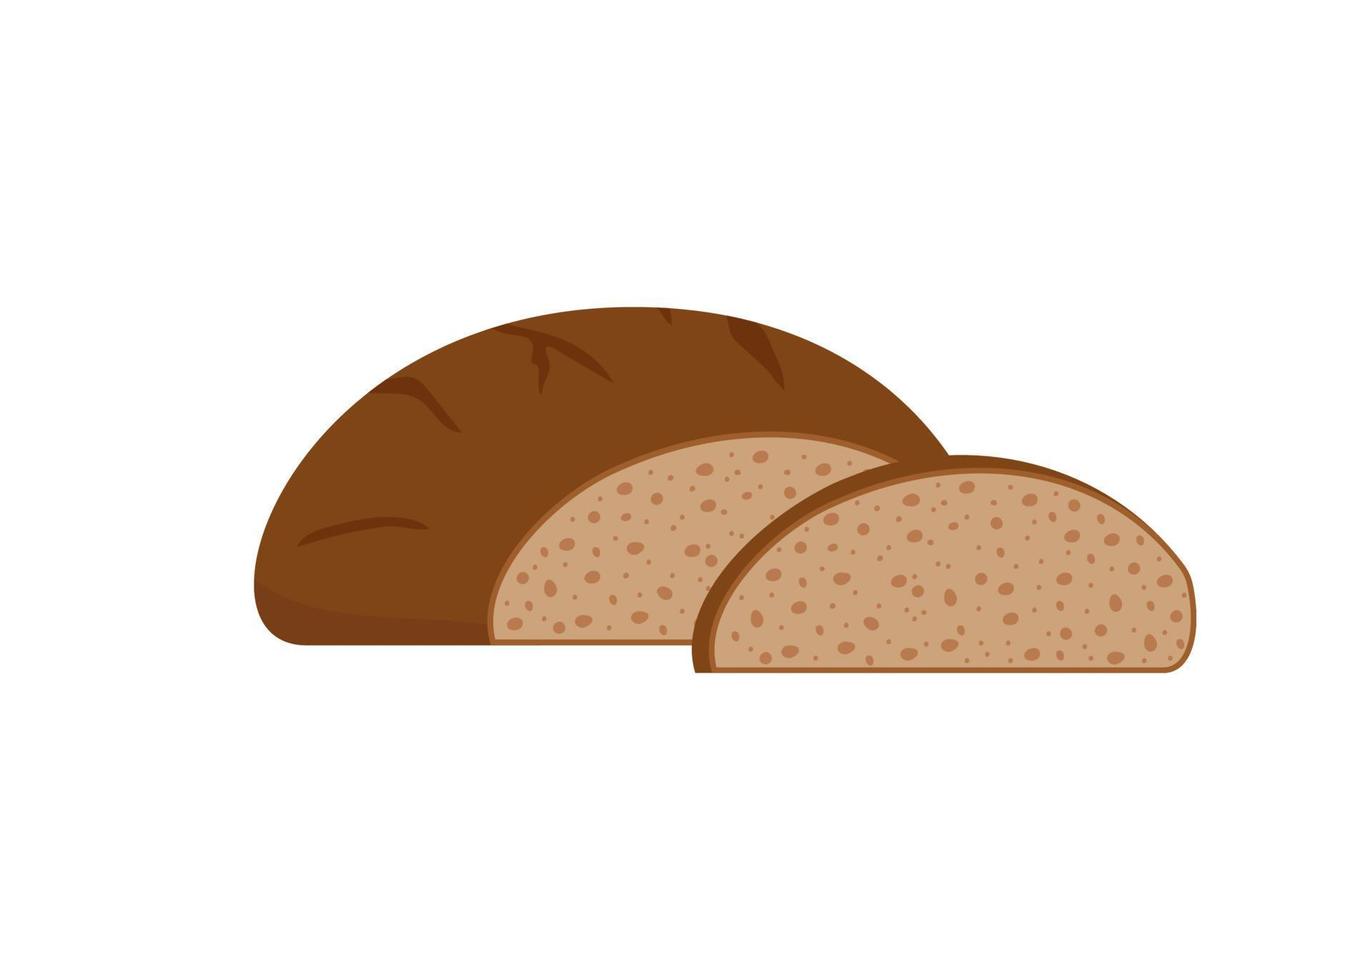 pan de hojaldre de centeno, comida de panadería marrón, bollo. pan circular con rebanada cortada. ilustración vectorial vector